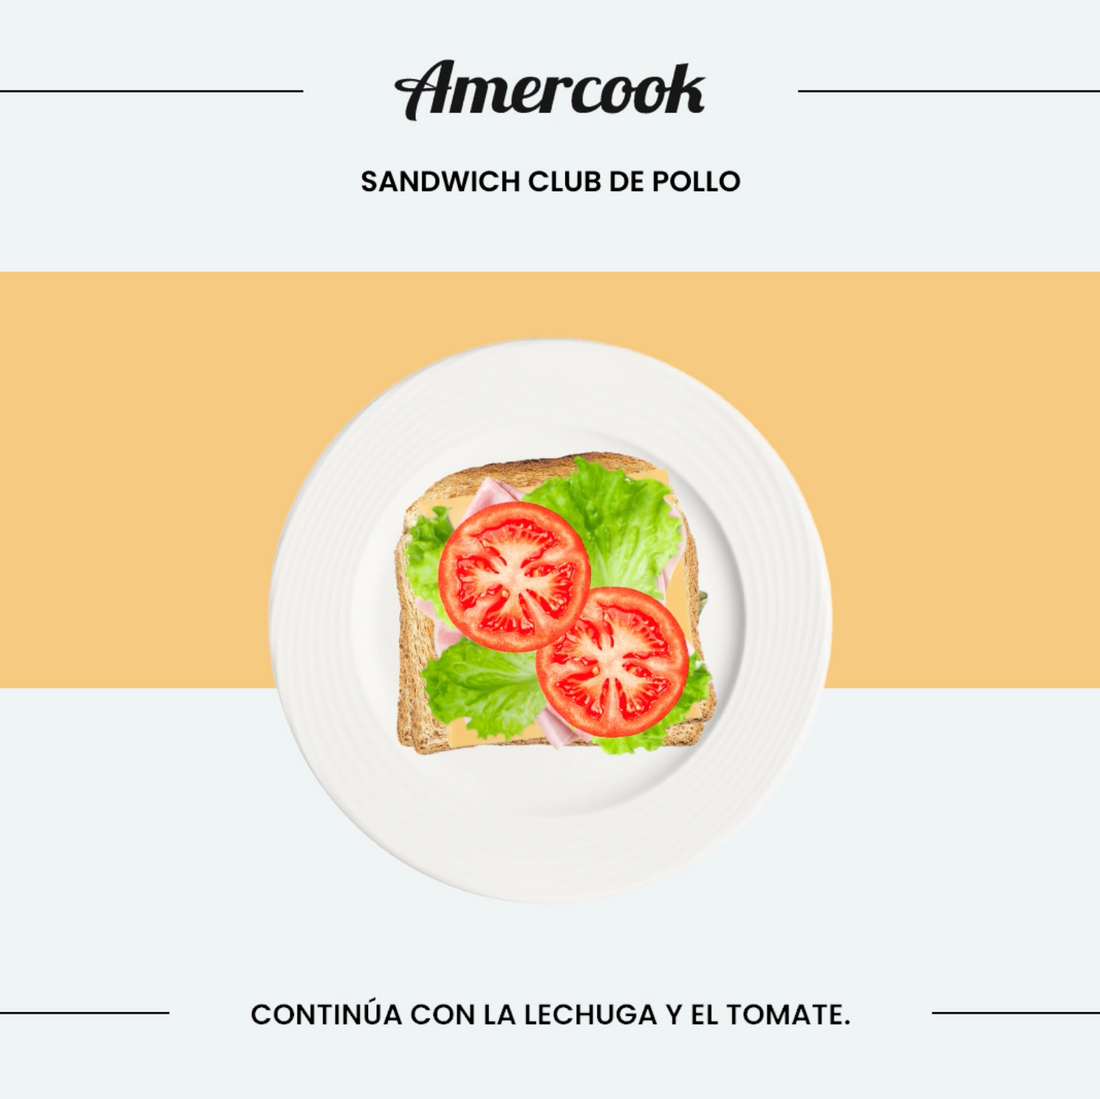 Club sandwich de pollo